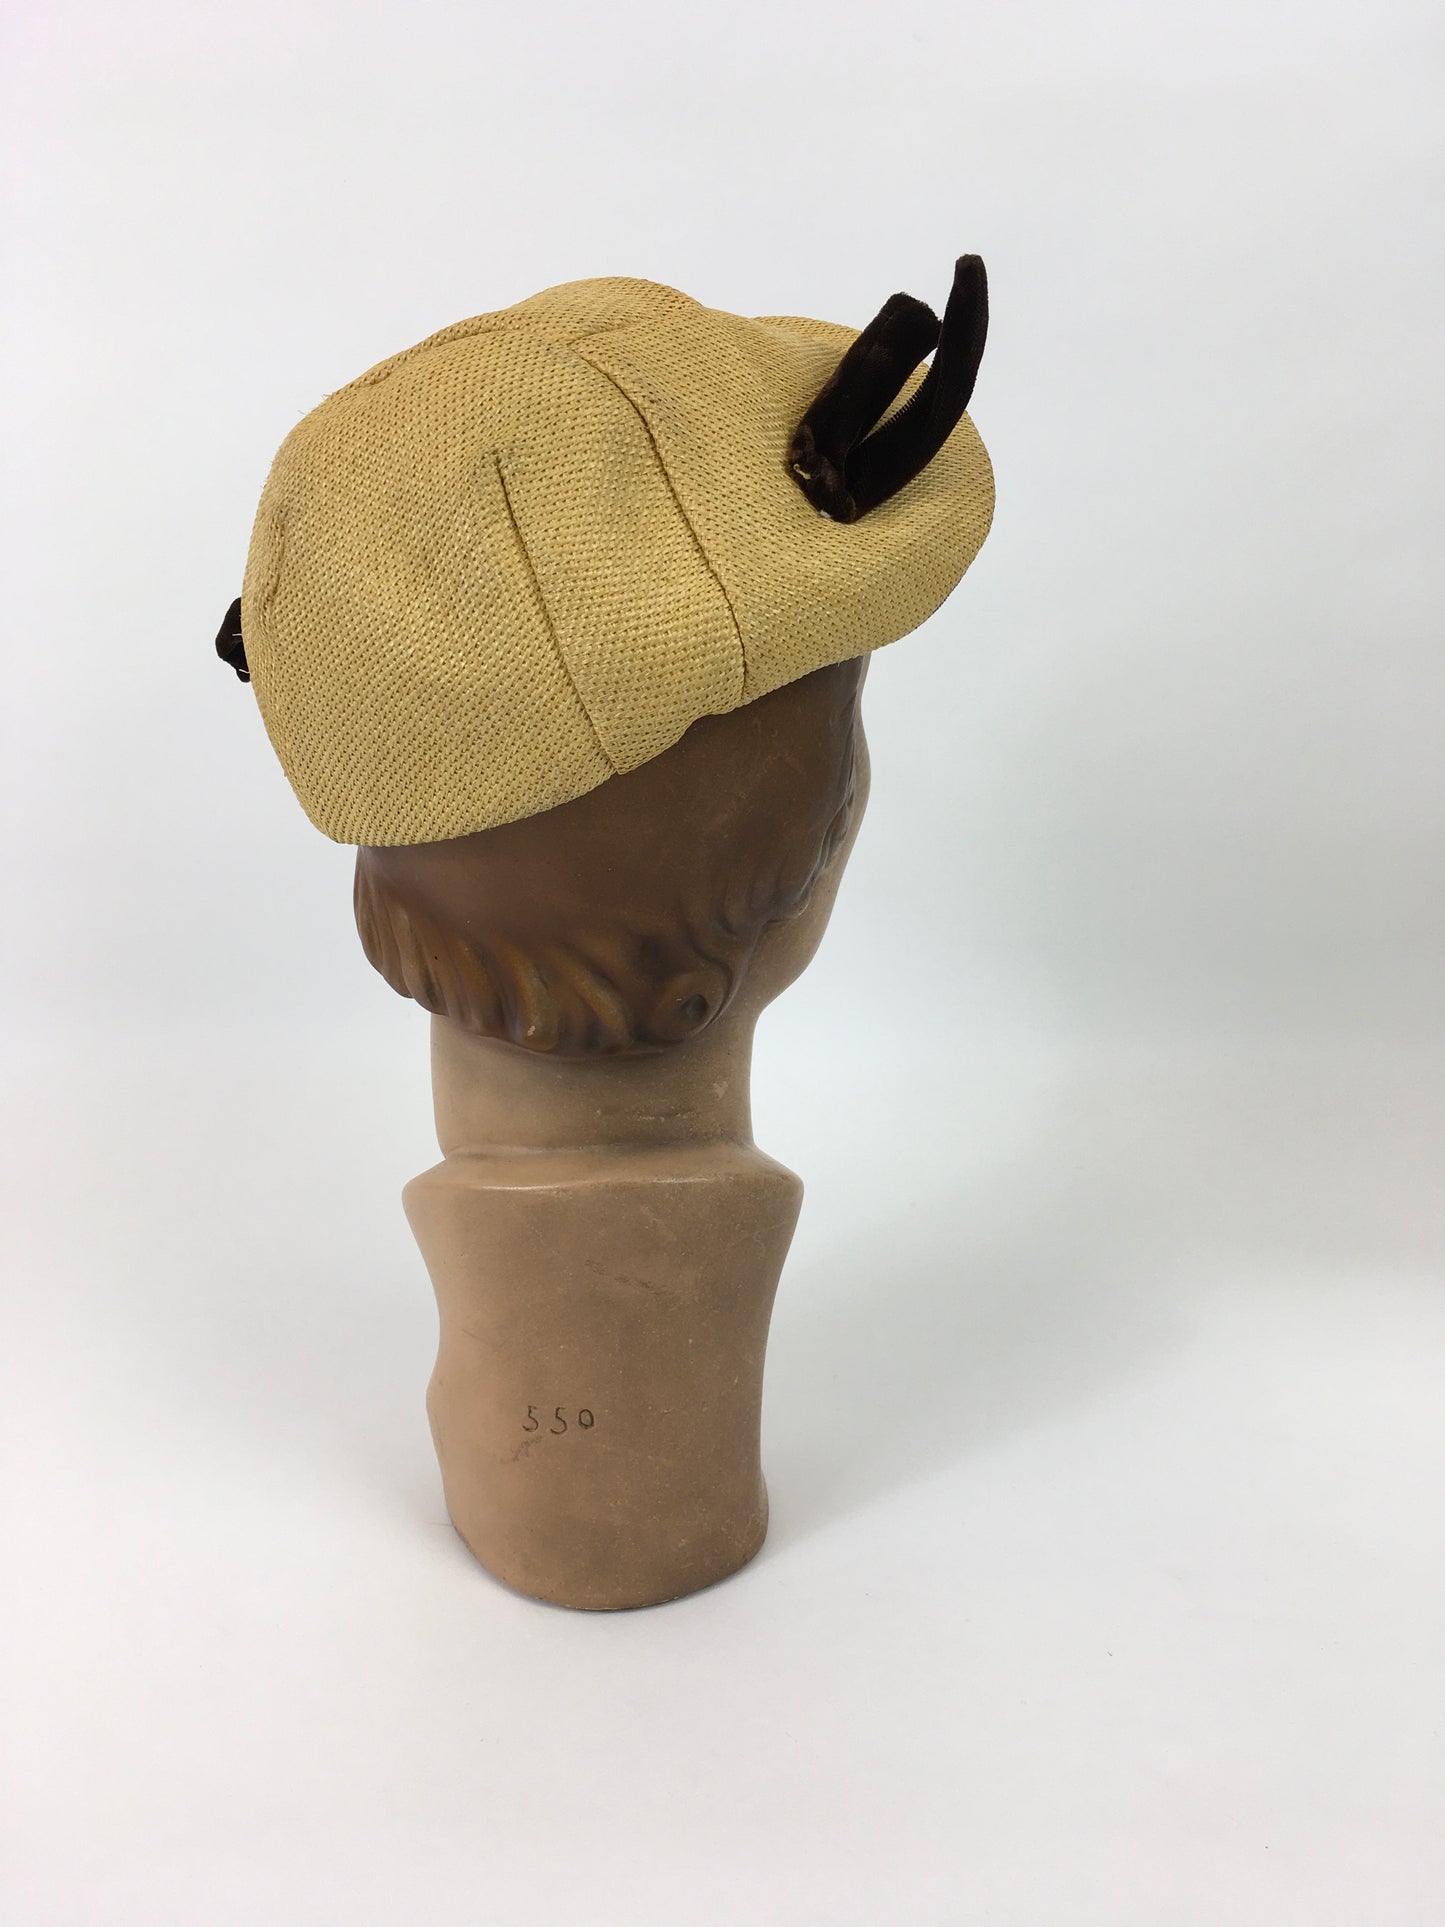 Original 1950’s Fun Autumnal Hat - In Warm Yellow and Brown Velvet Trims